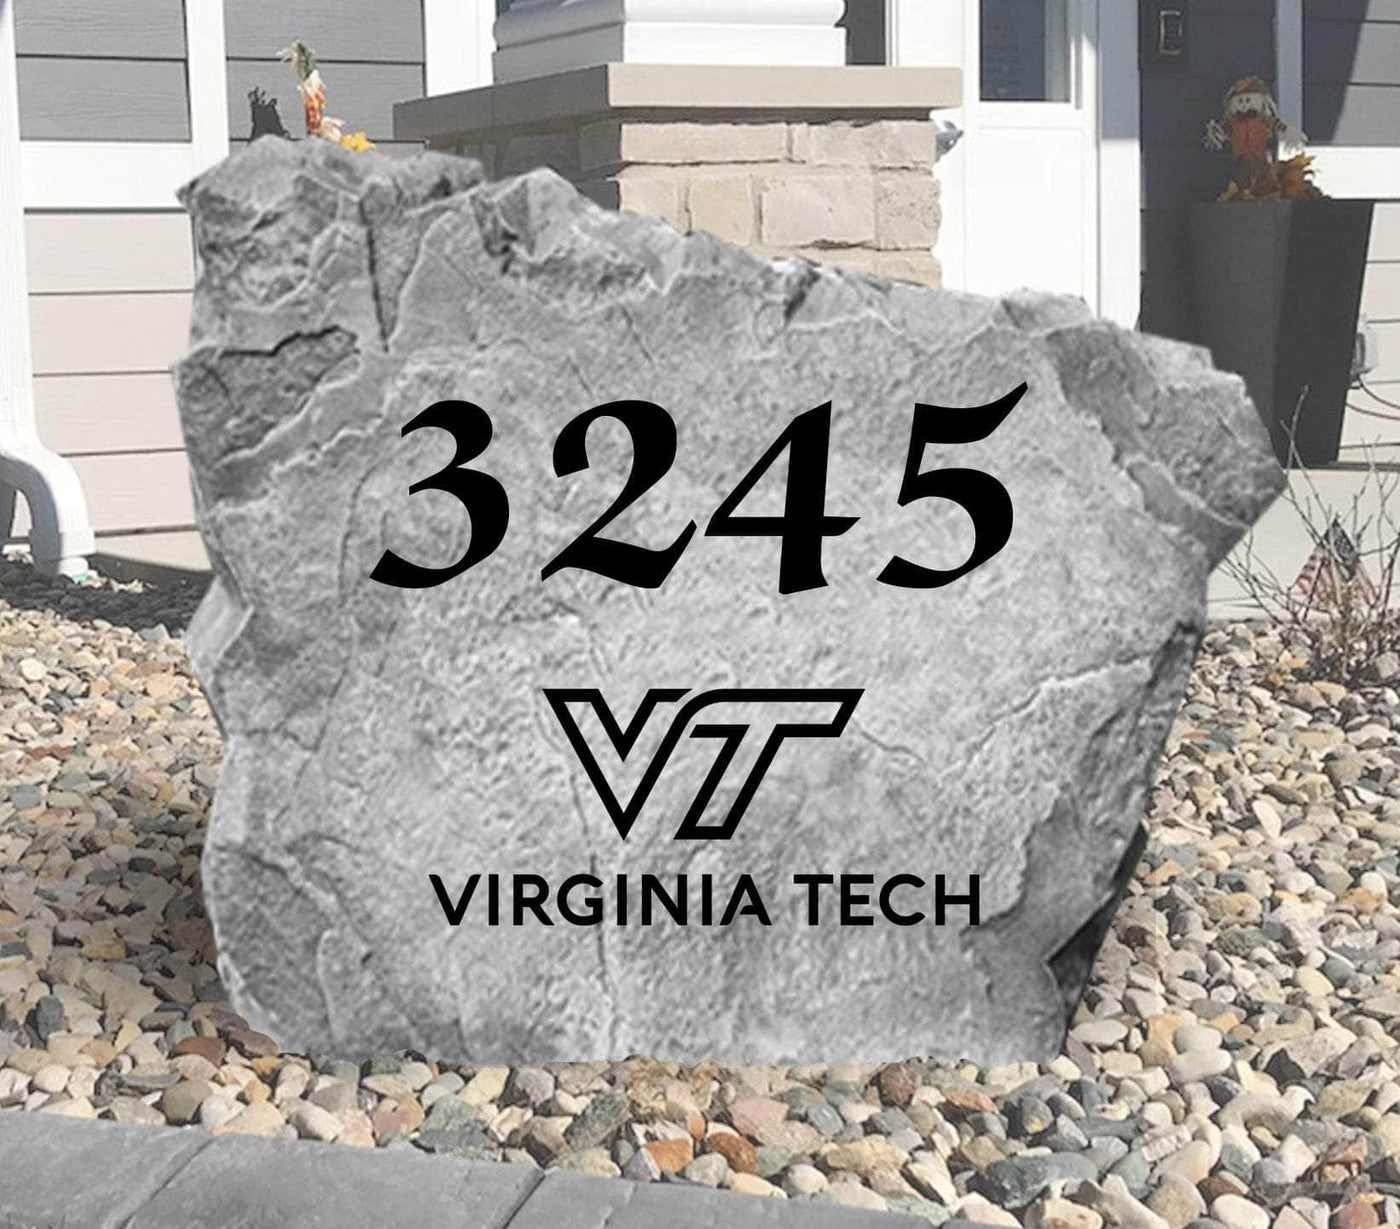 Virginia Tech Address Stone